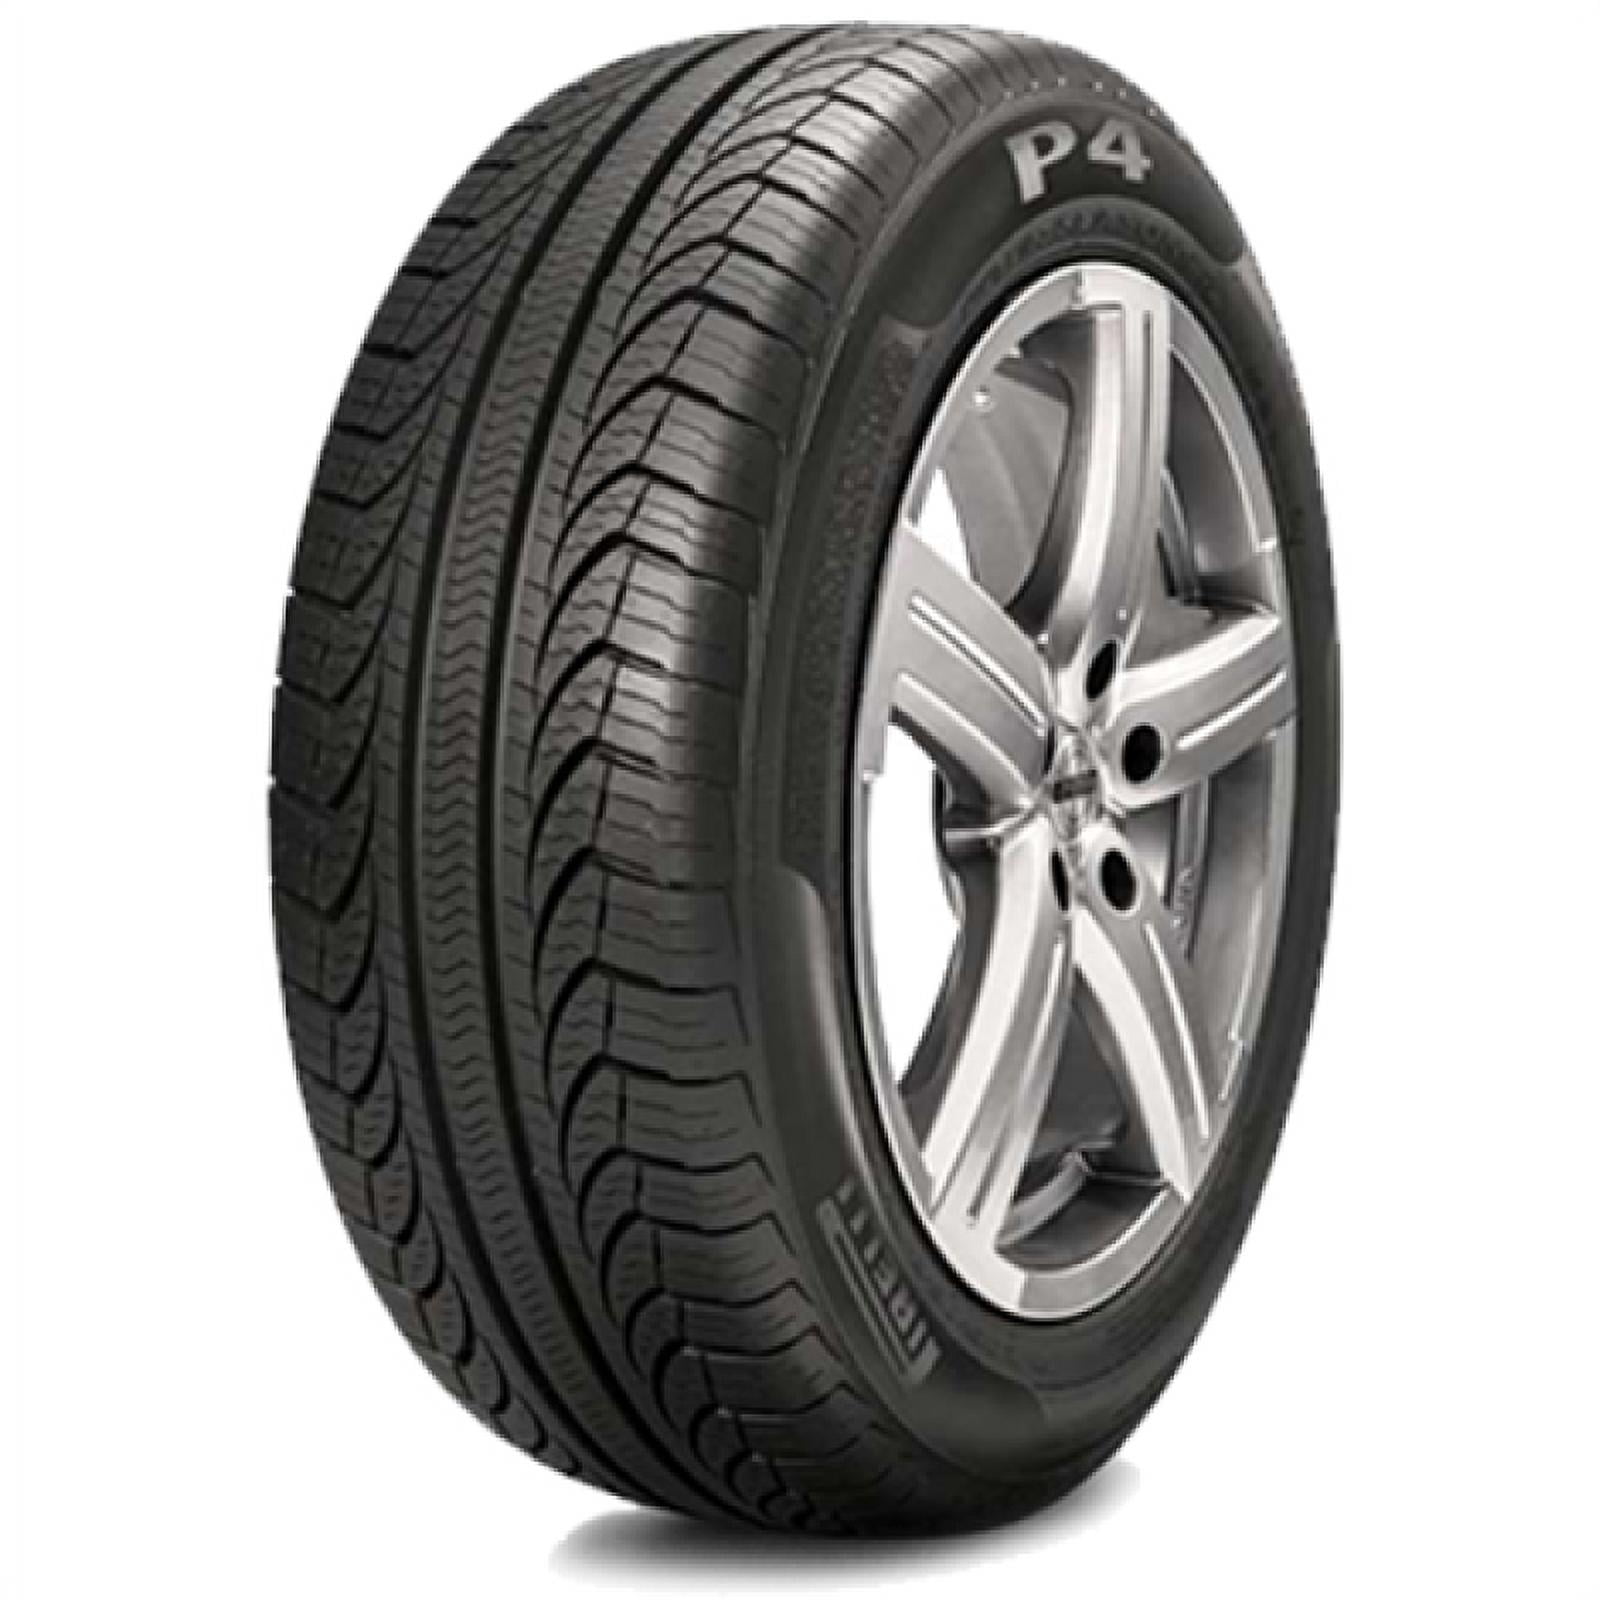 Goodyear Tires Viva 3 All-Season 215/65R16 98T Tire - Walmart.com